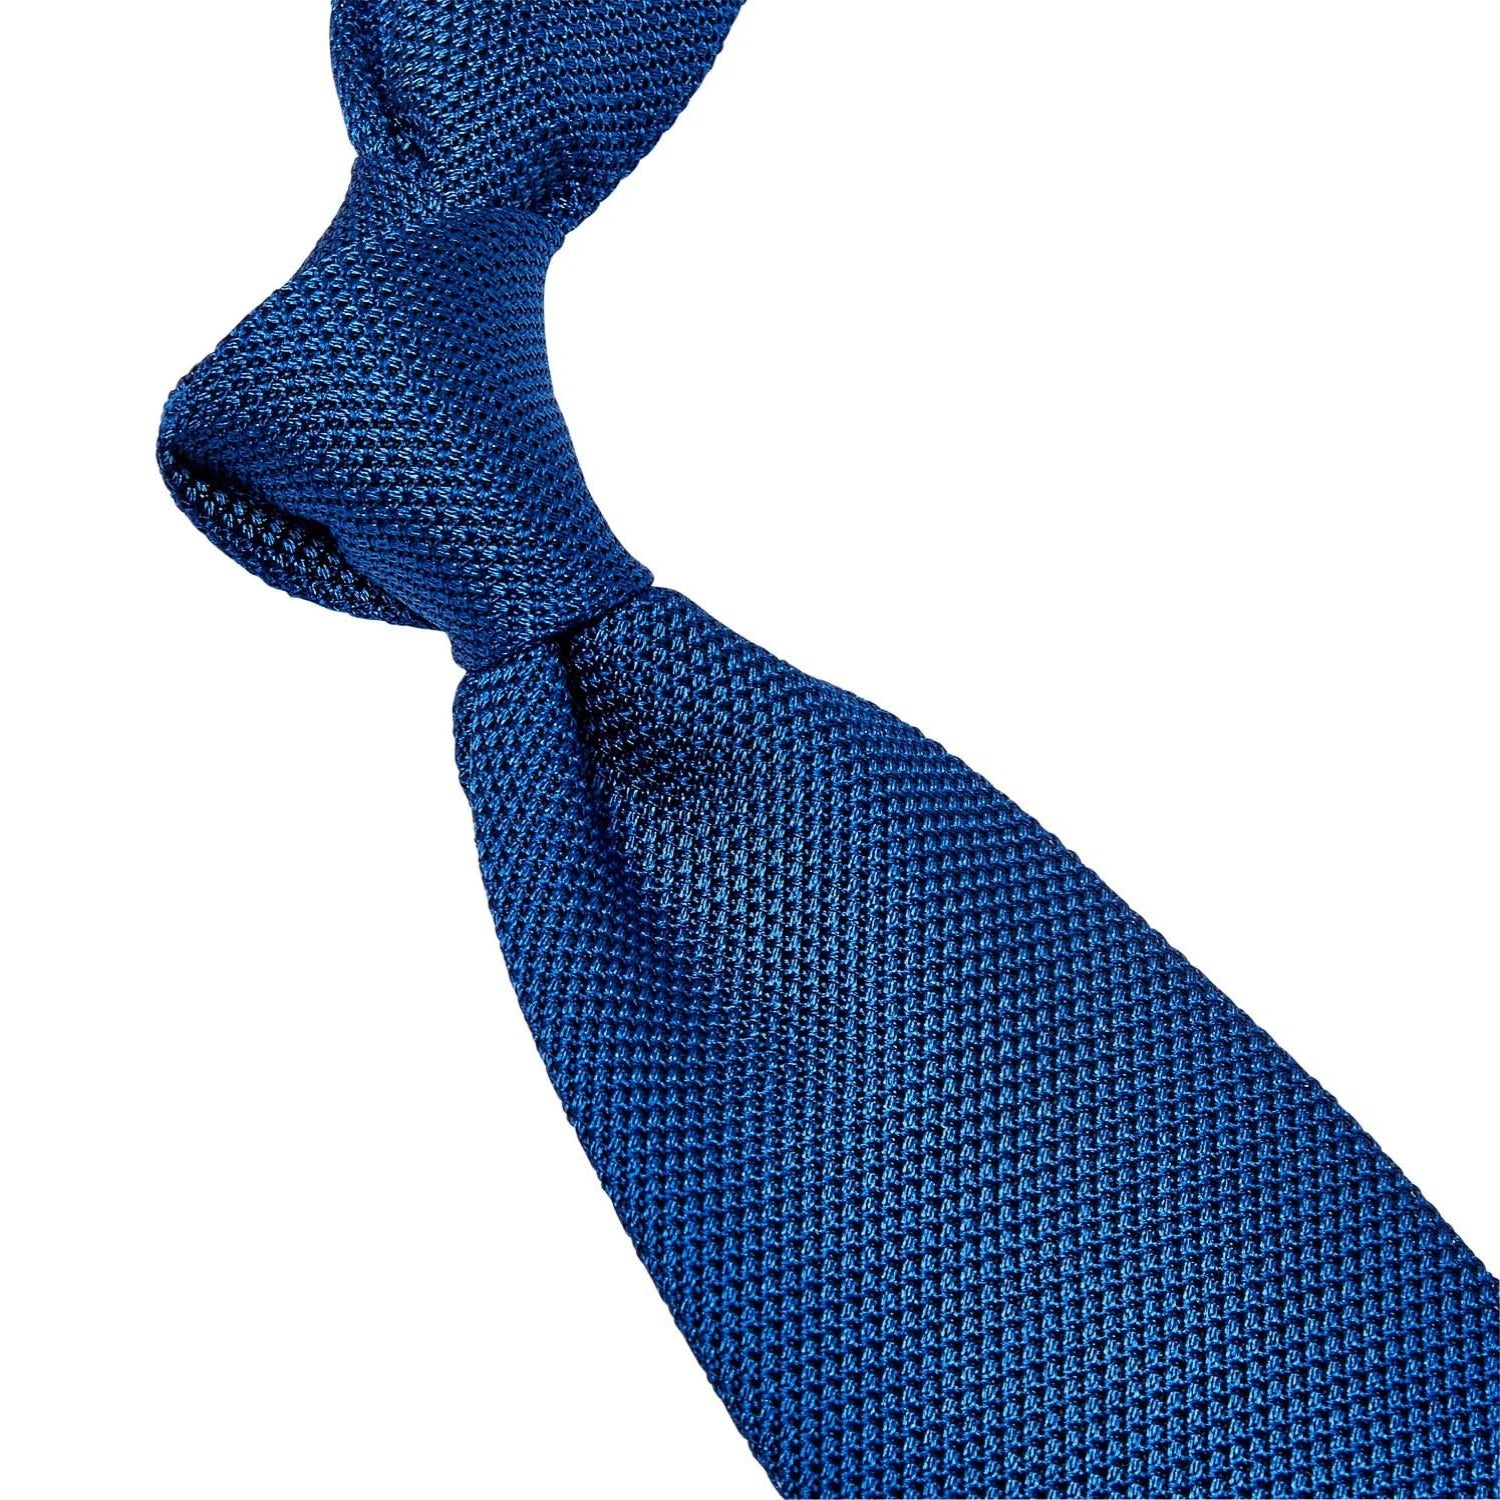 A KirbyAllison.com Sovereign Grade Grenadine Fina Bright Blue Tie from the United Kingdom.